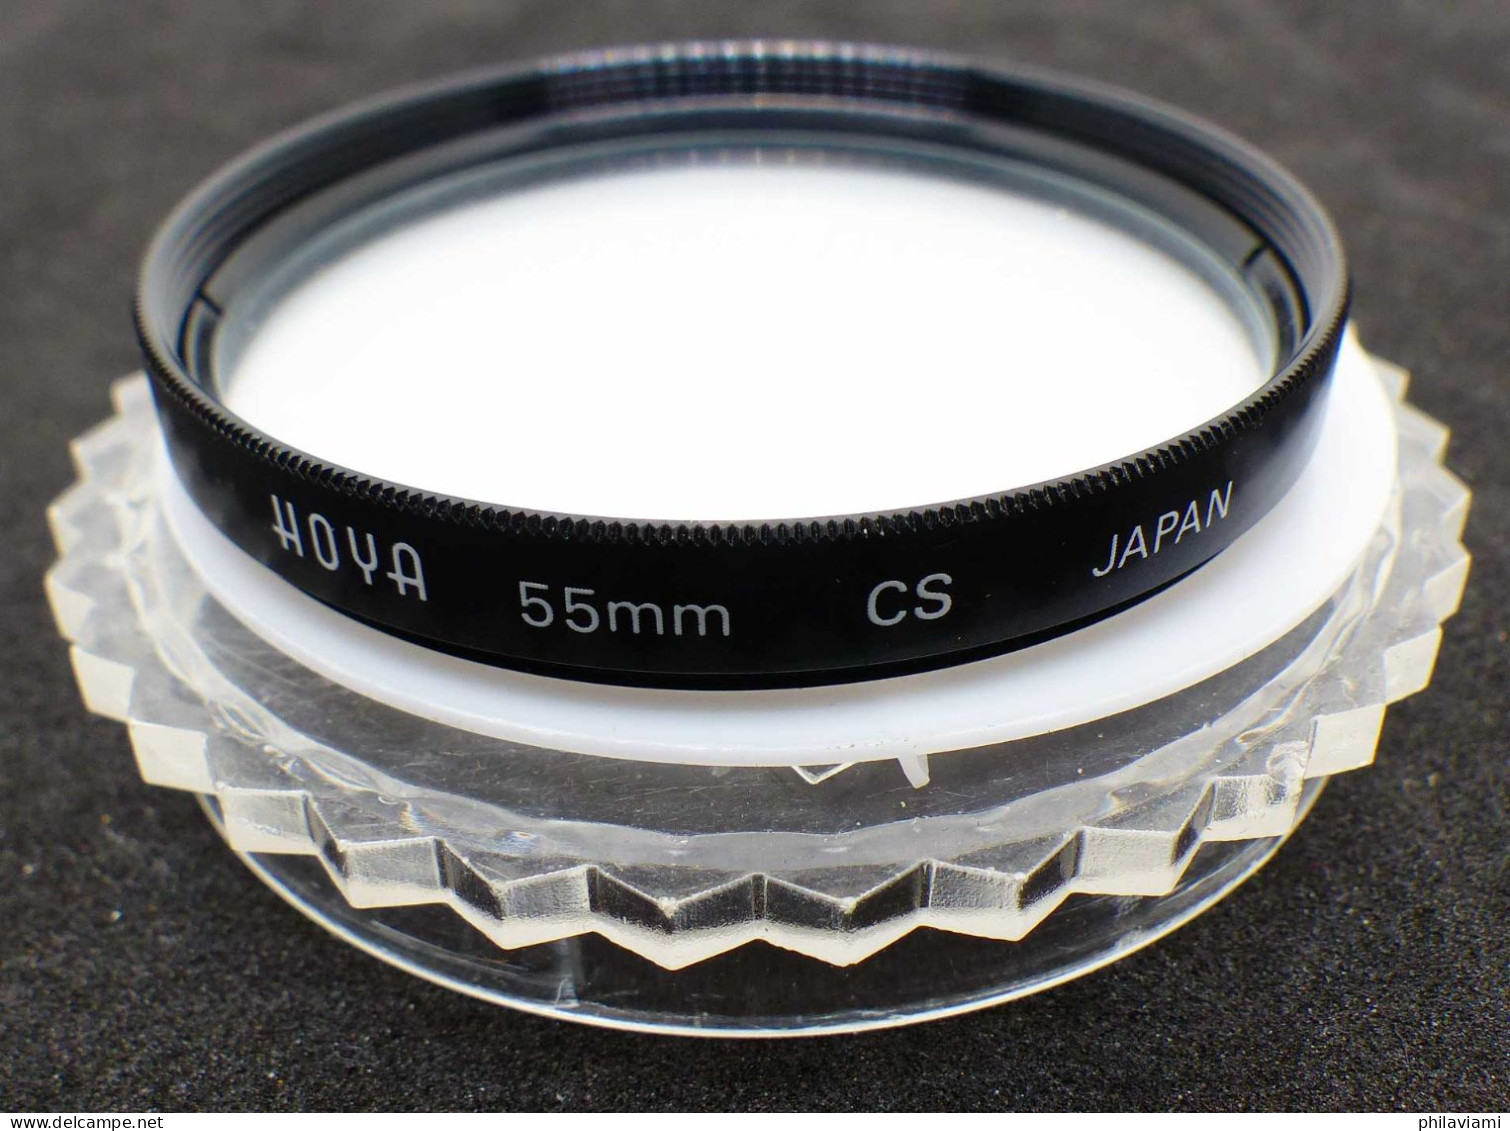 Hoya trois filtres: UV, Yellow et CS (Cross screen) monture 55mm